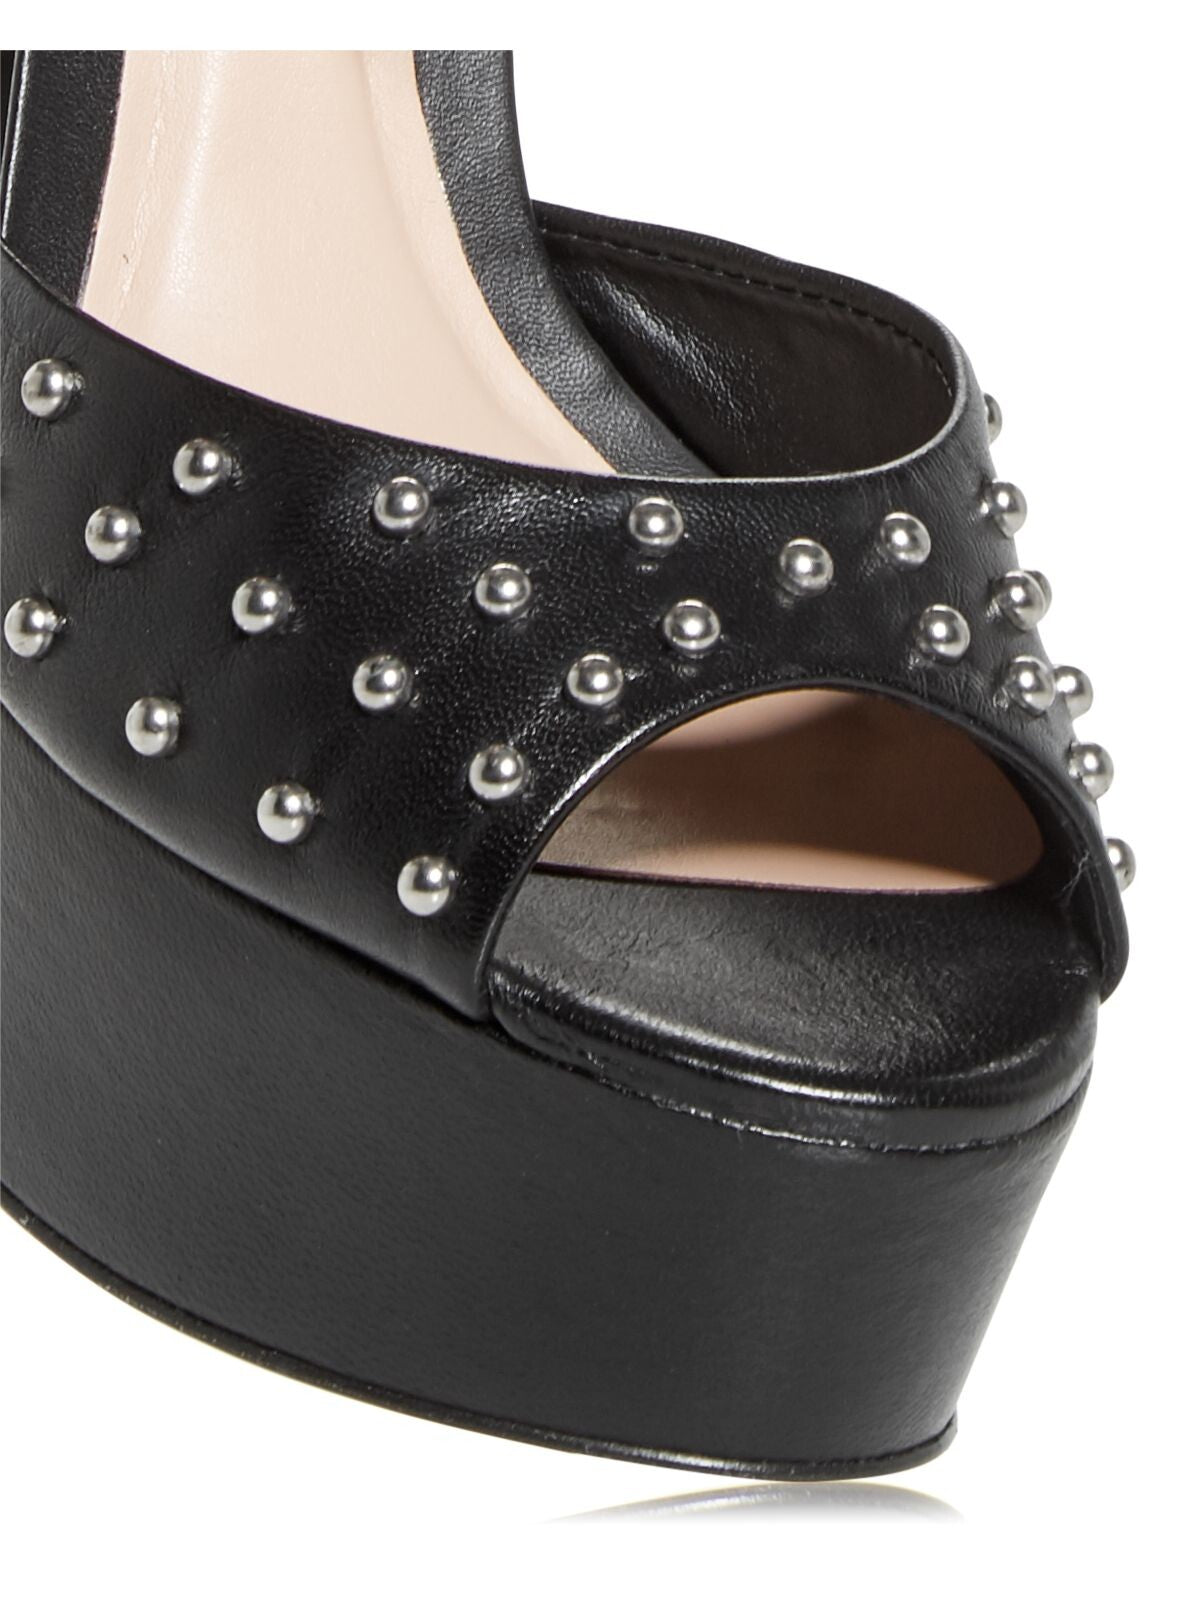 AQUA Womens Black 1-1/2" Platform Ankle Strap Studded Cullen Round Toe Block Heel Buckle Dress Sandals Shoes B